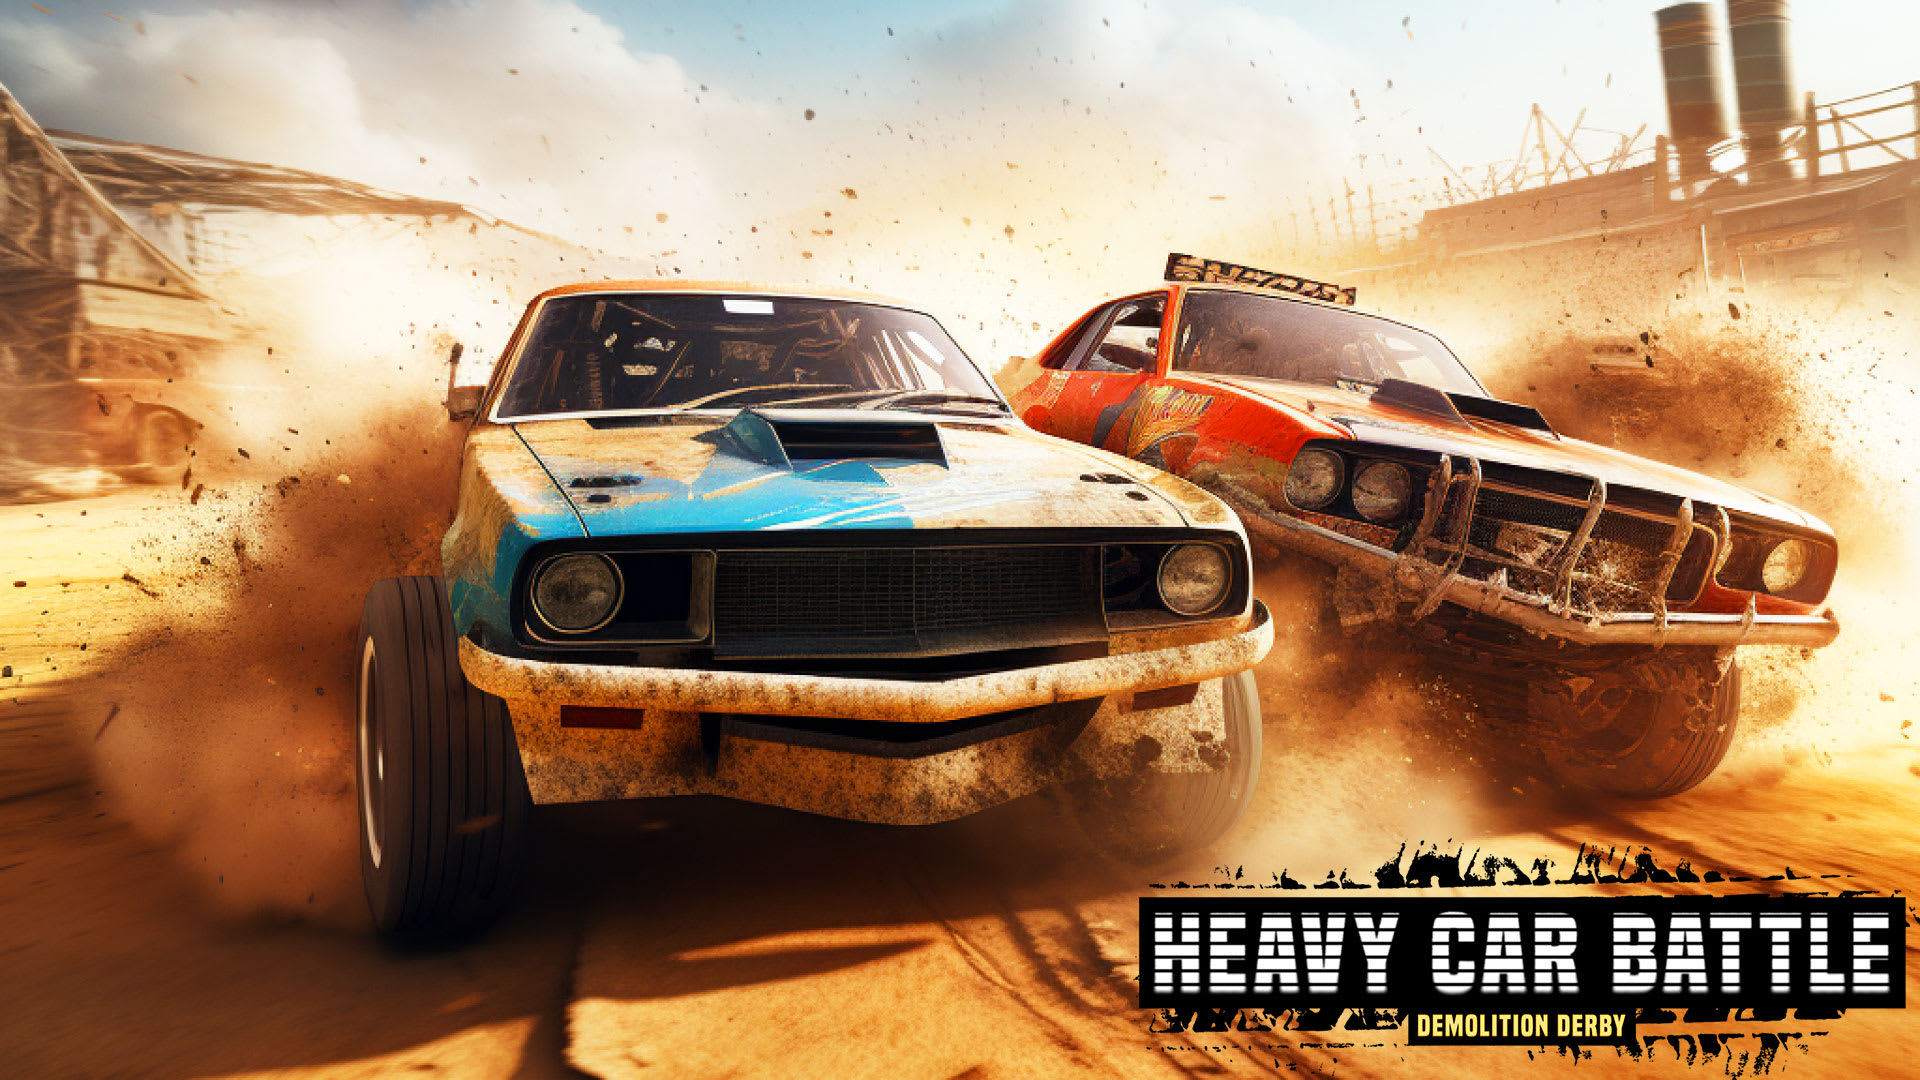 Heavy Car Battle - Demolition Derby 1